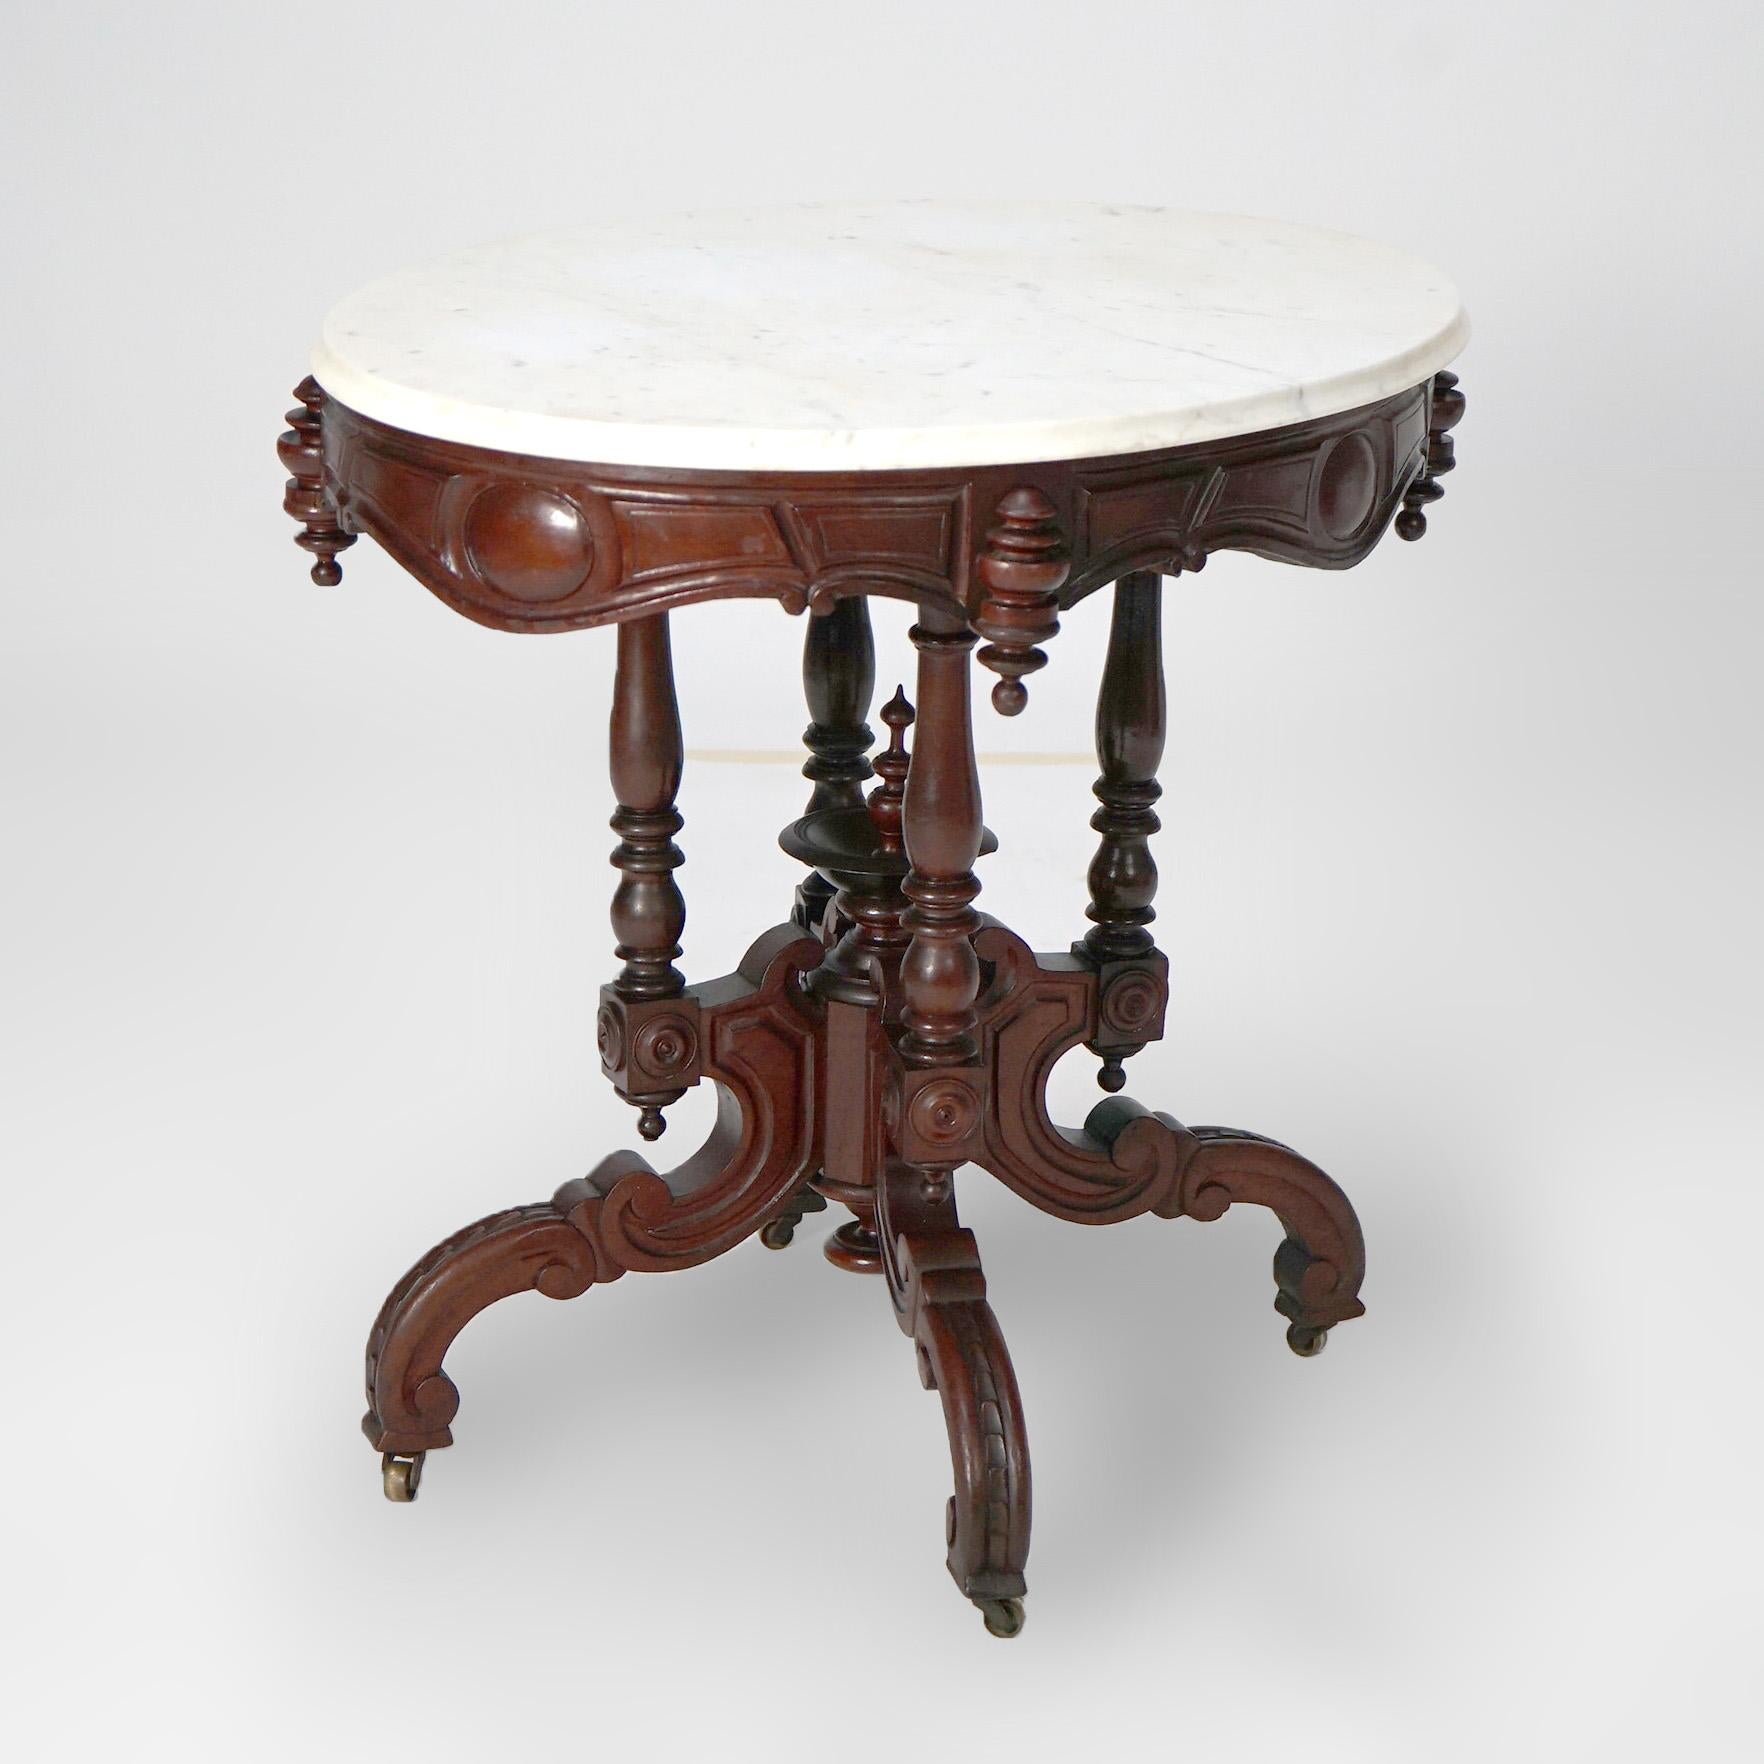 Antique Renaissance Revival Brooks Walnut Oval Marble Top Parlor Table c1890 For Sale 5